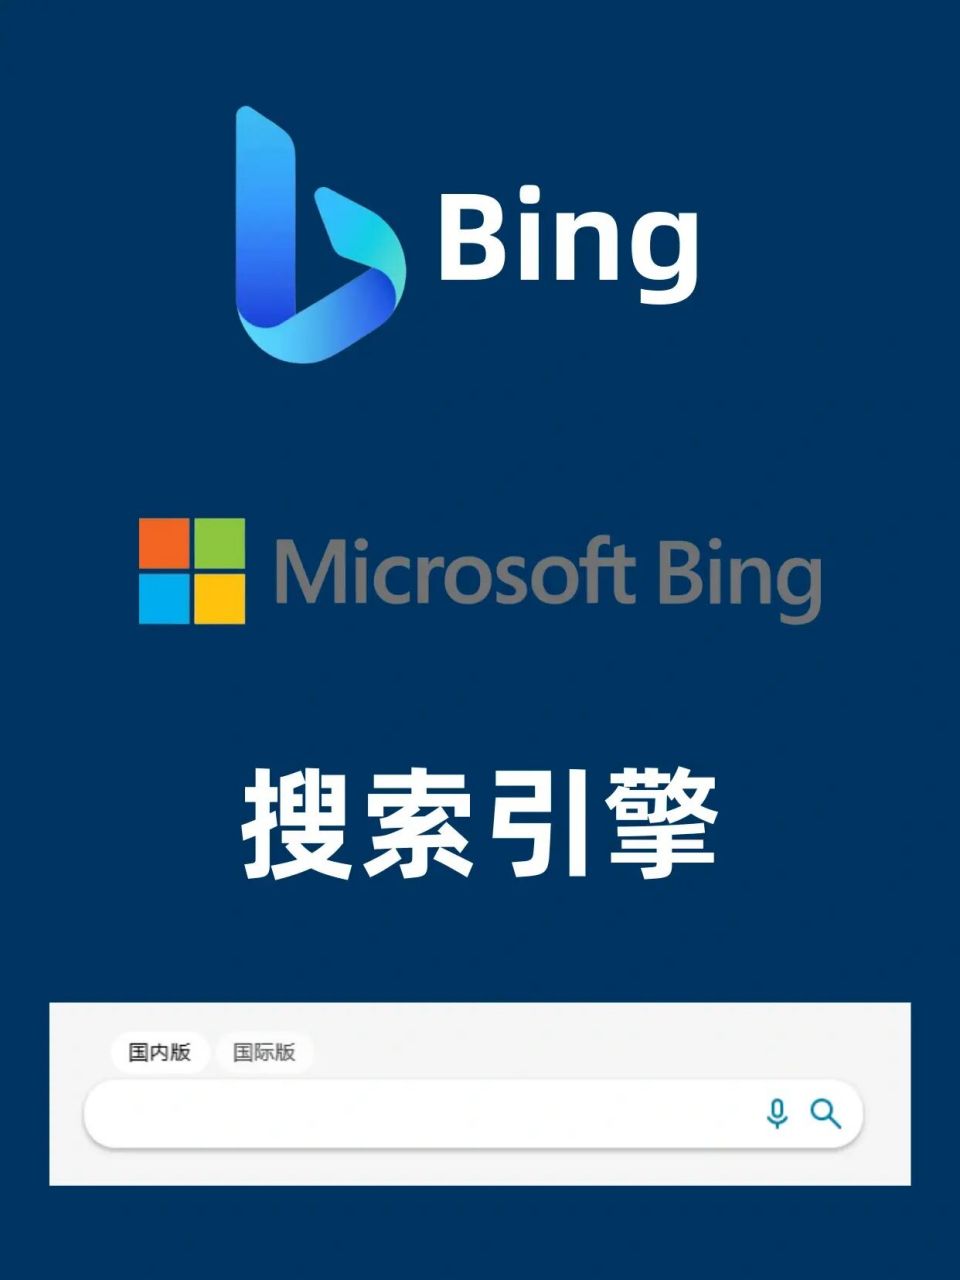 bing搜索引擎是由微软公司开发和运营的一款搜索引擎